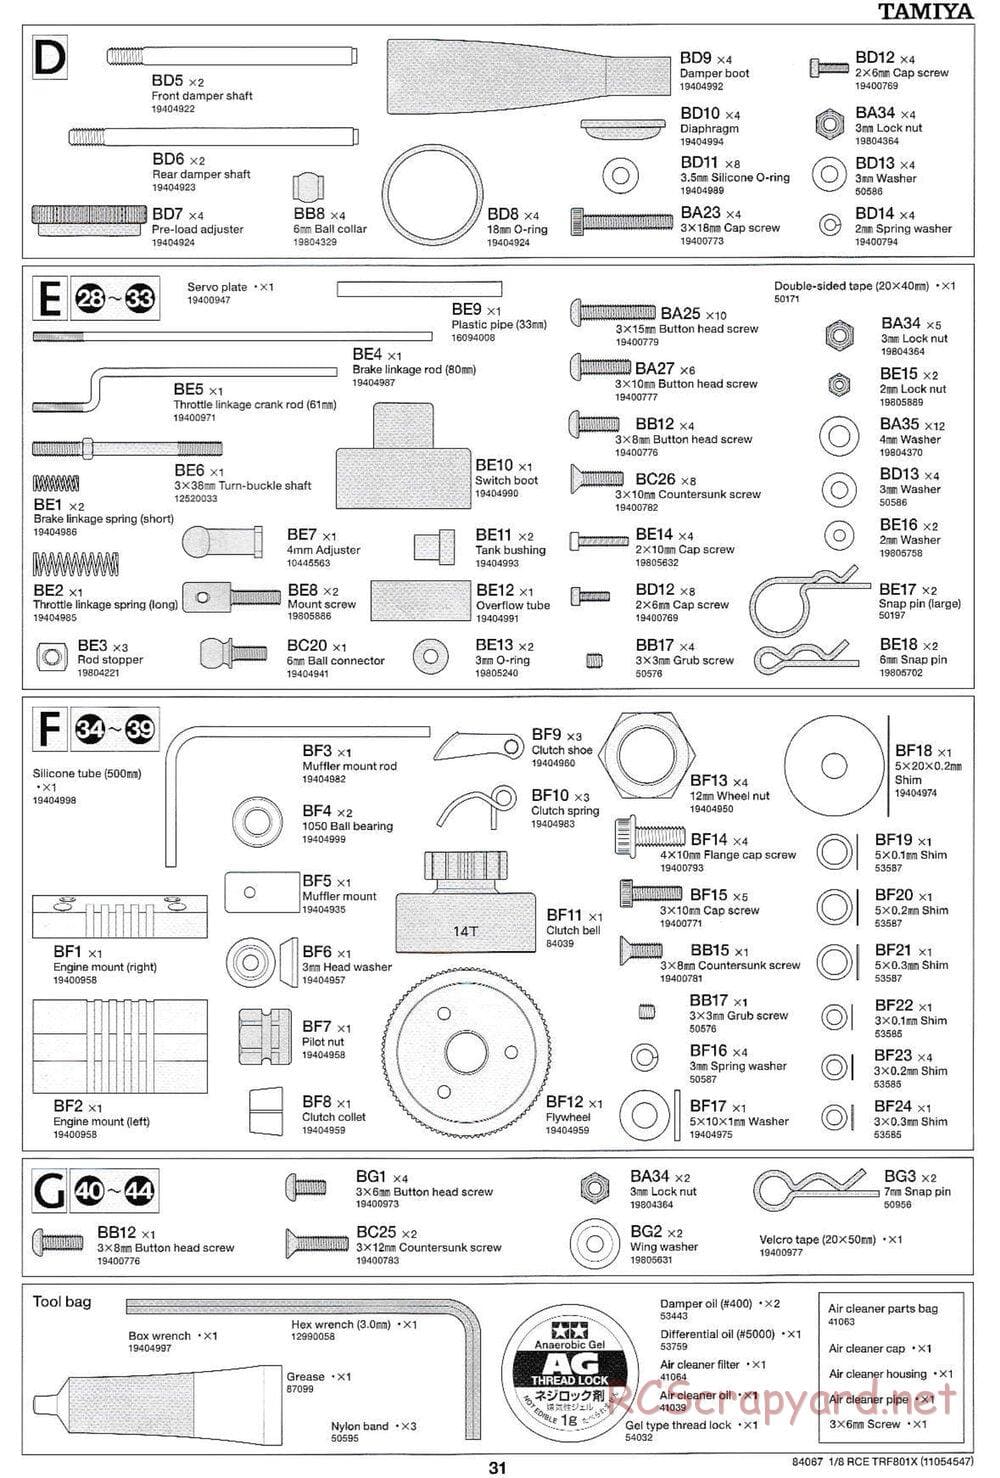 Tamiya - TRF801X Chassis - Manual - Page 31